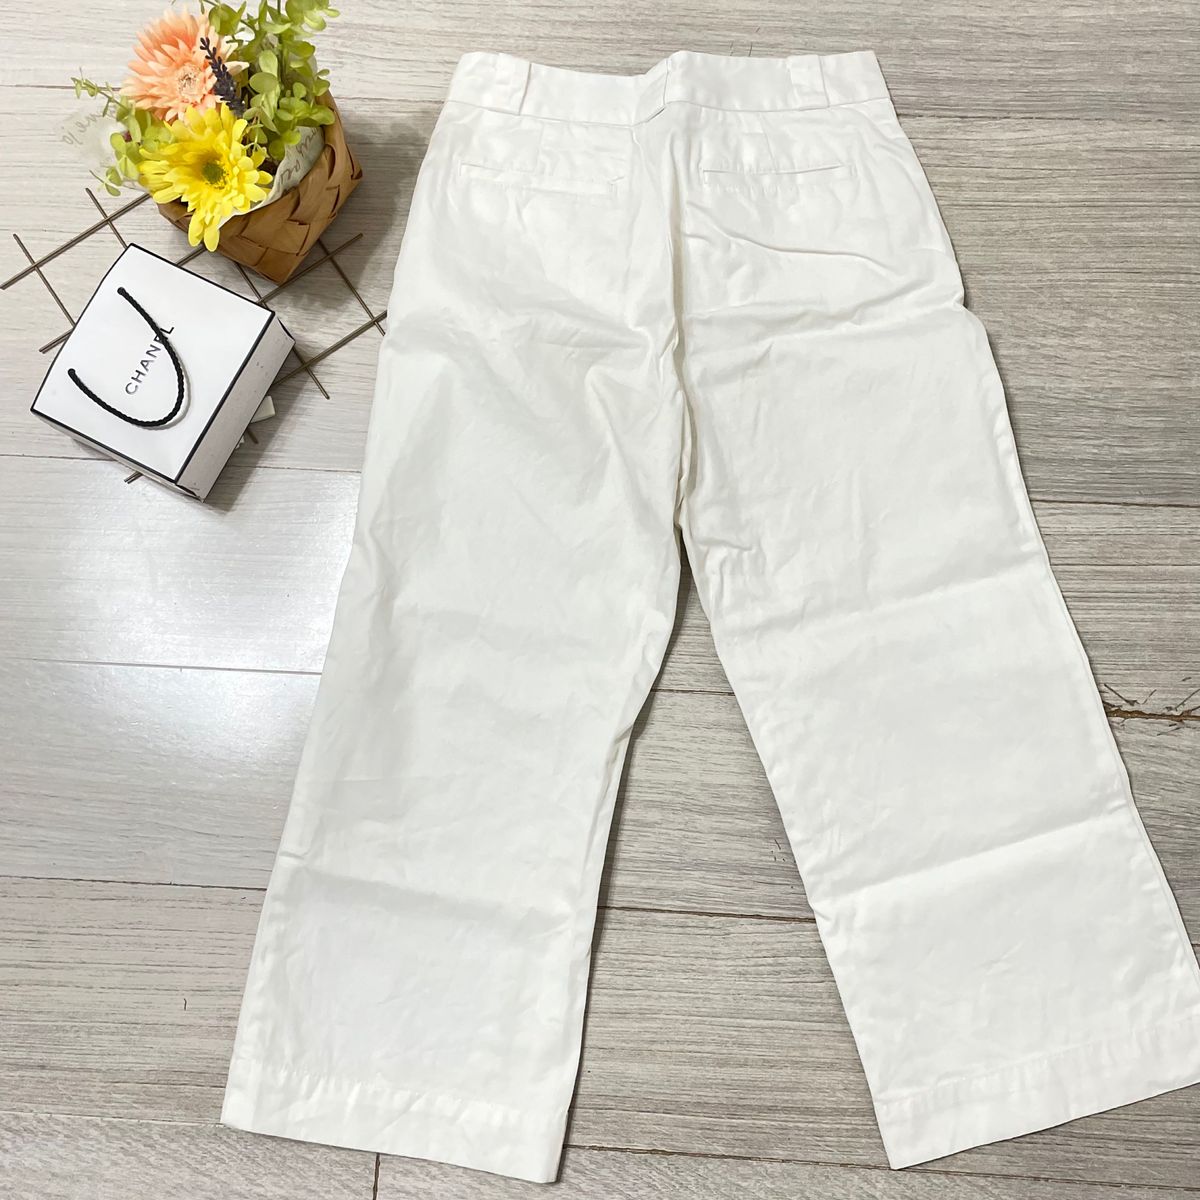 GAP ギャップ  パンツ コットン ホワイト 白 ストレートパンツ ワイドパンツ サイズ2 Mサイズ 春服